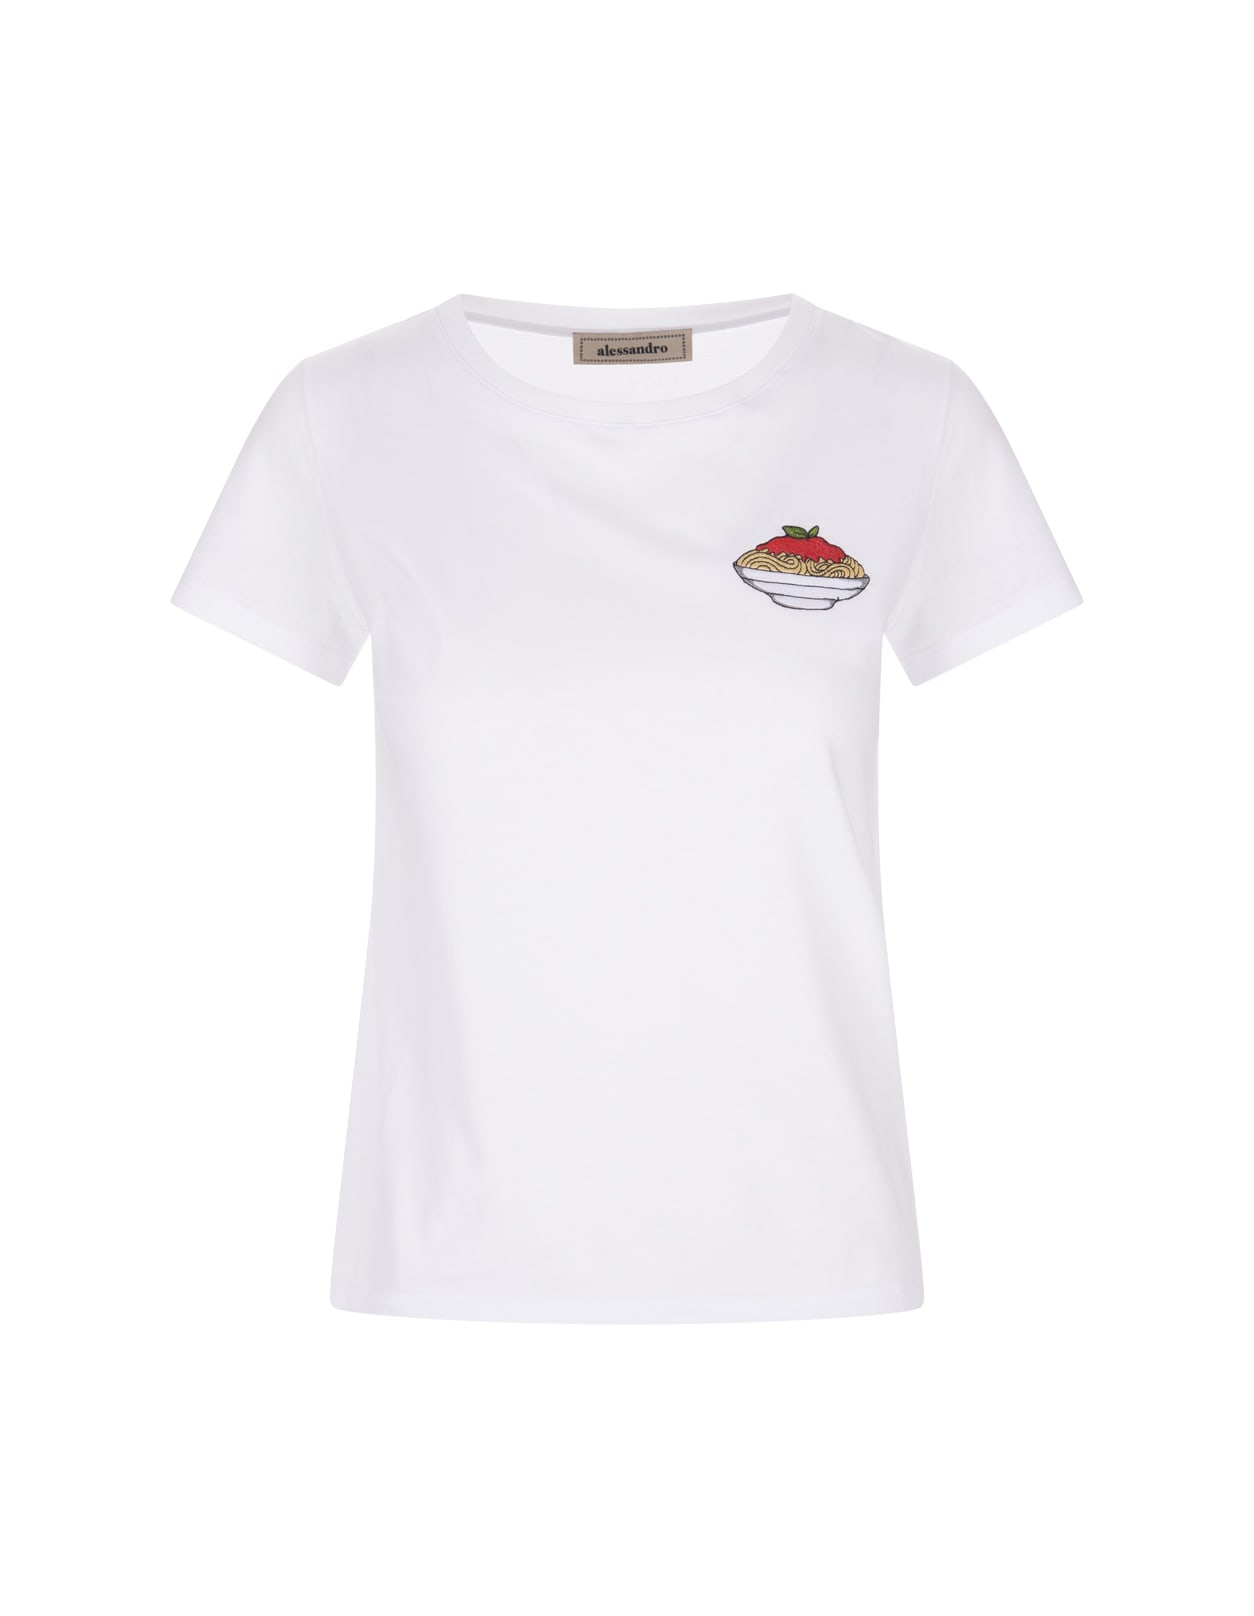 Alessandro Enriquez White T-shirt With Spaghetti Embroidery